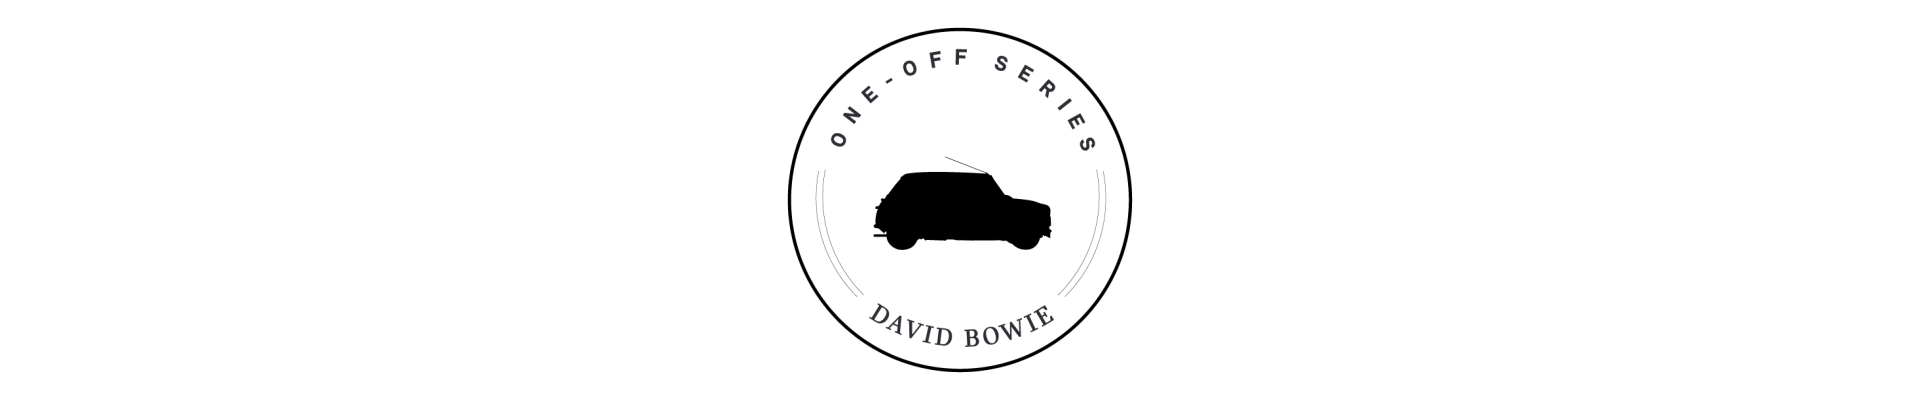 David Bowie MINI logo.